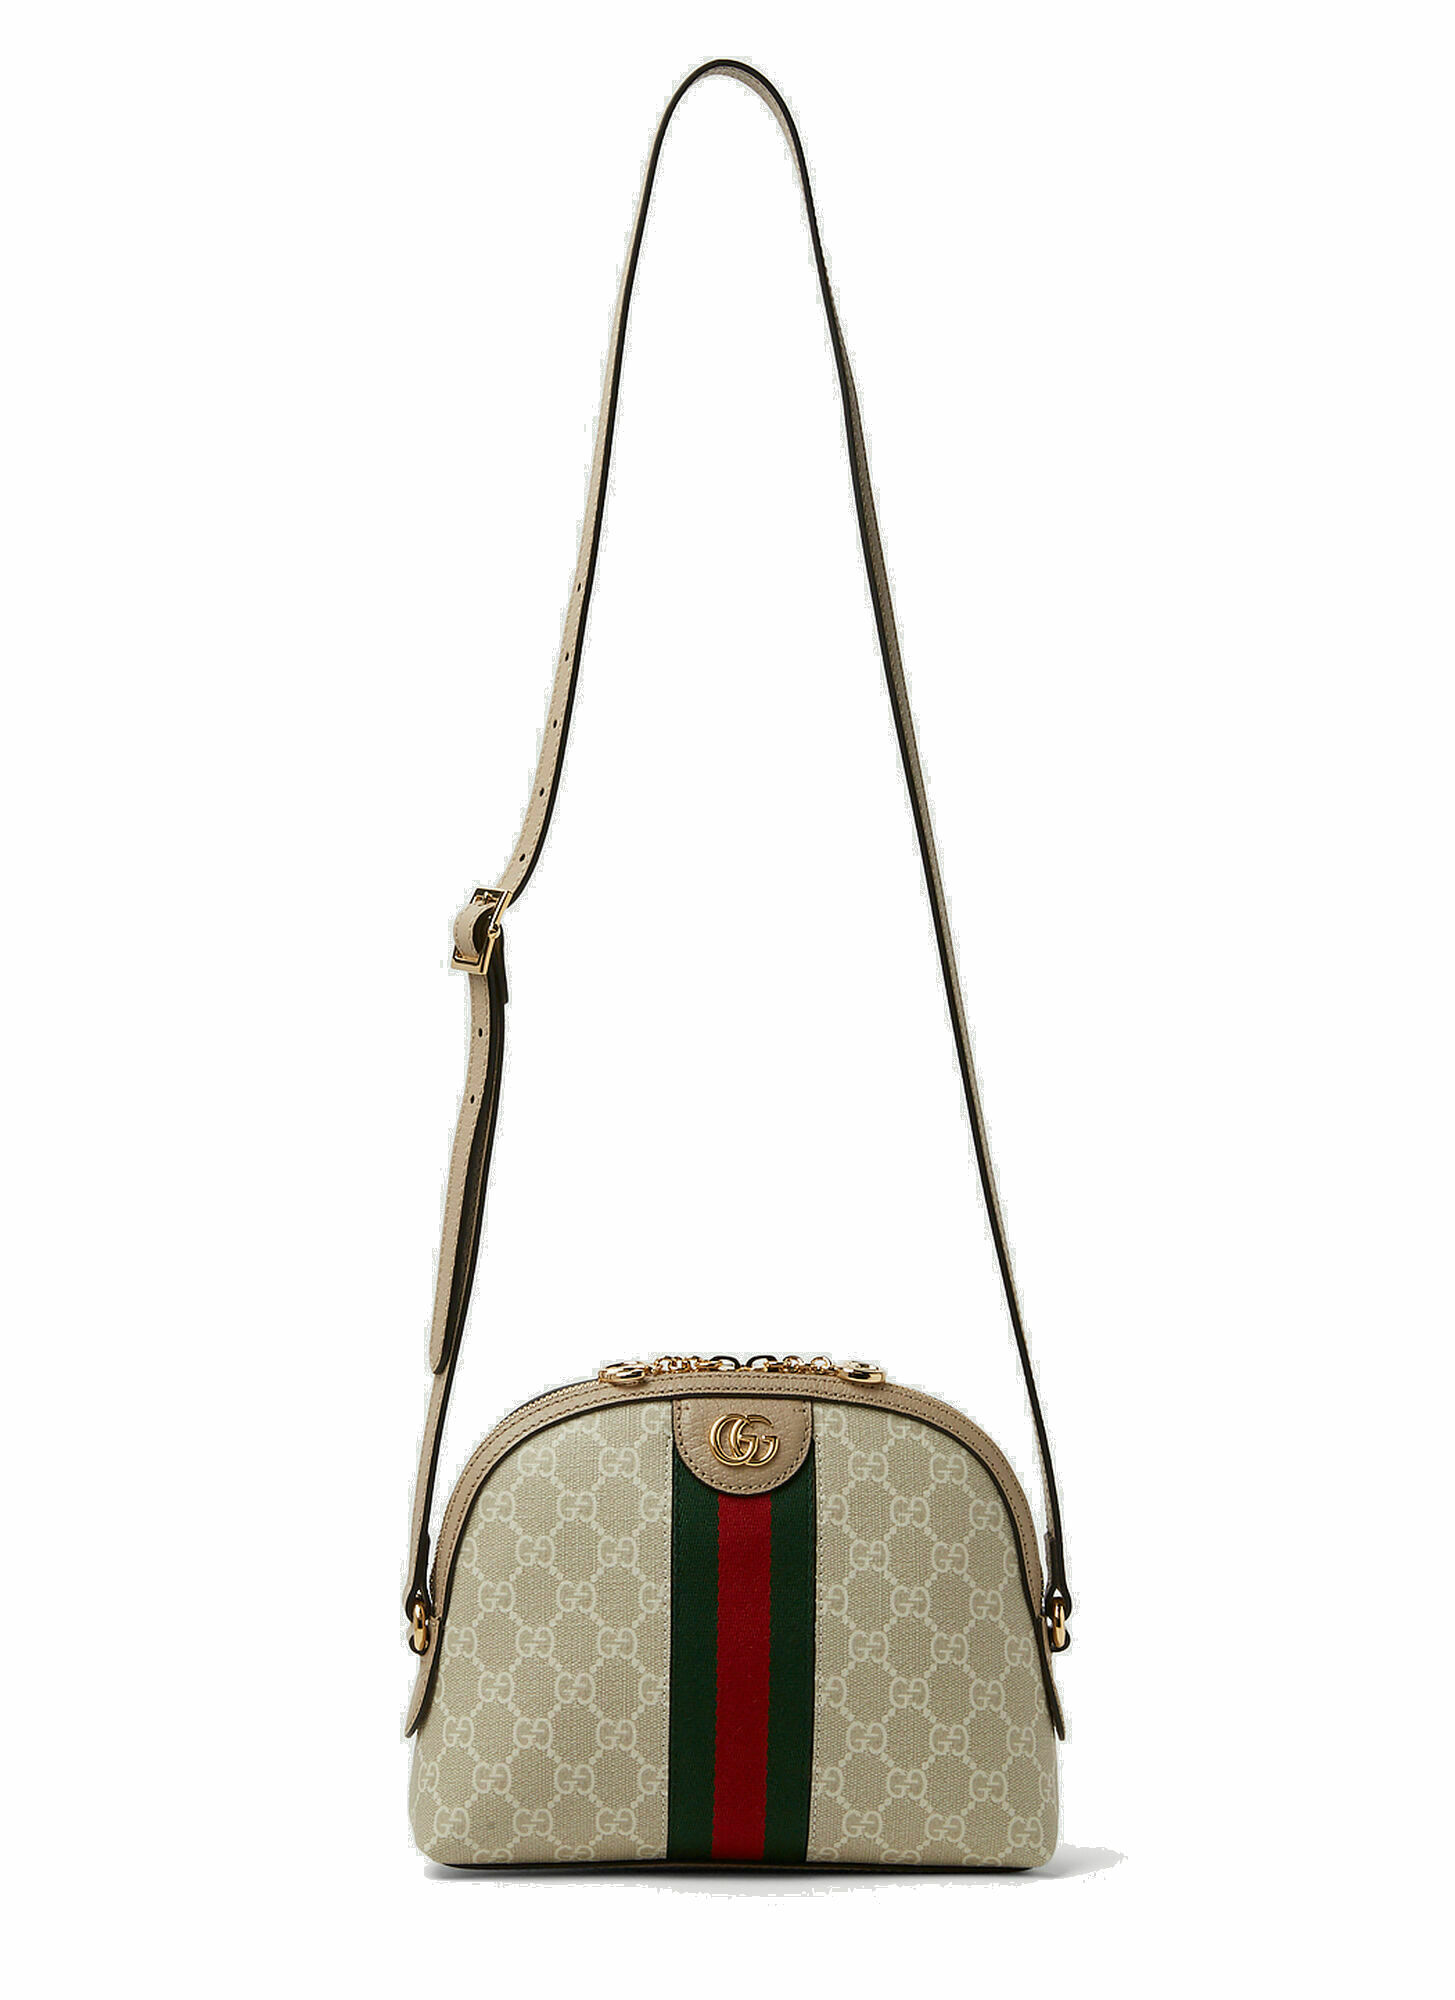 Ophidia GG Shoulder Bag in Cream Gucci